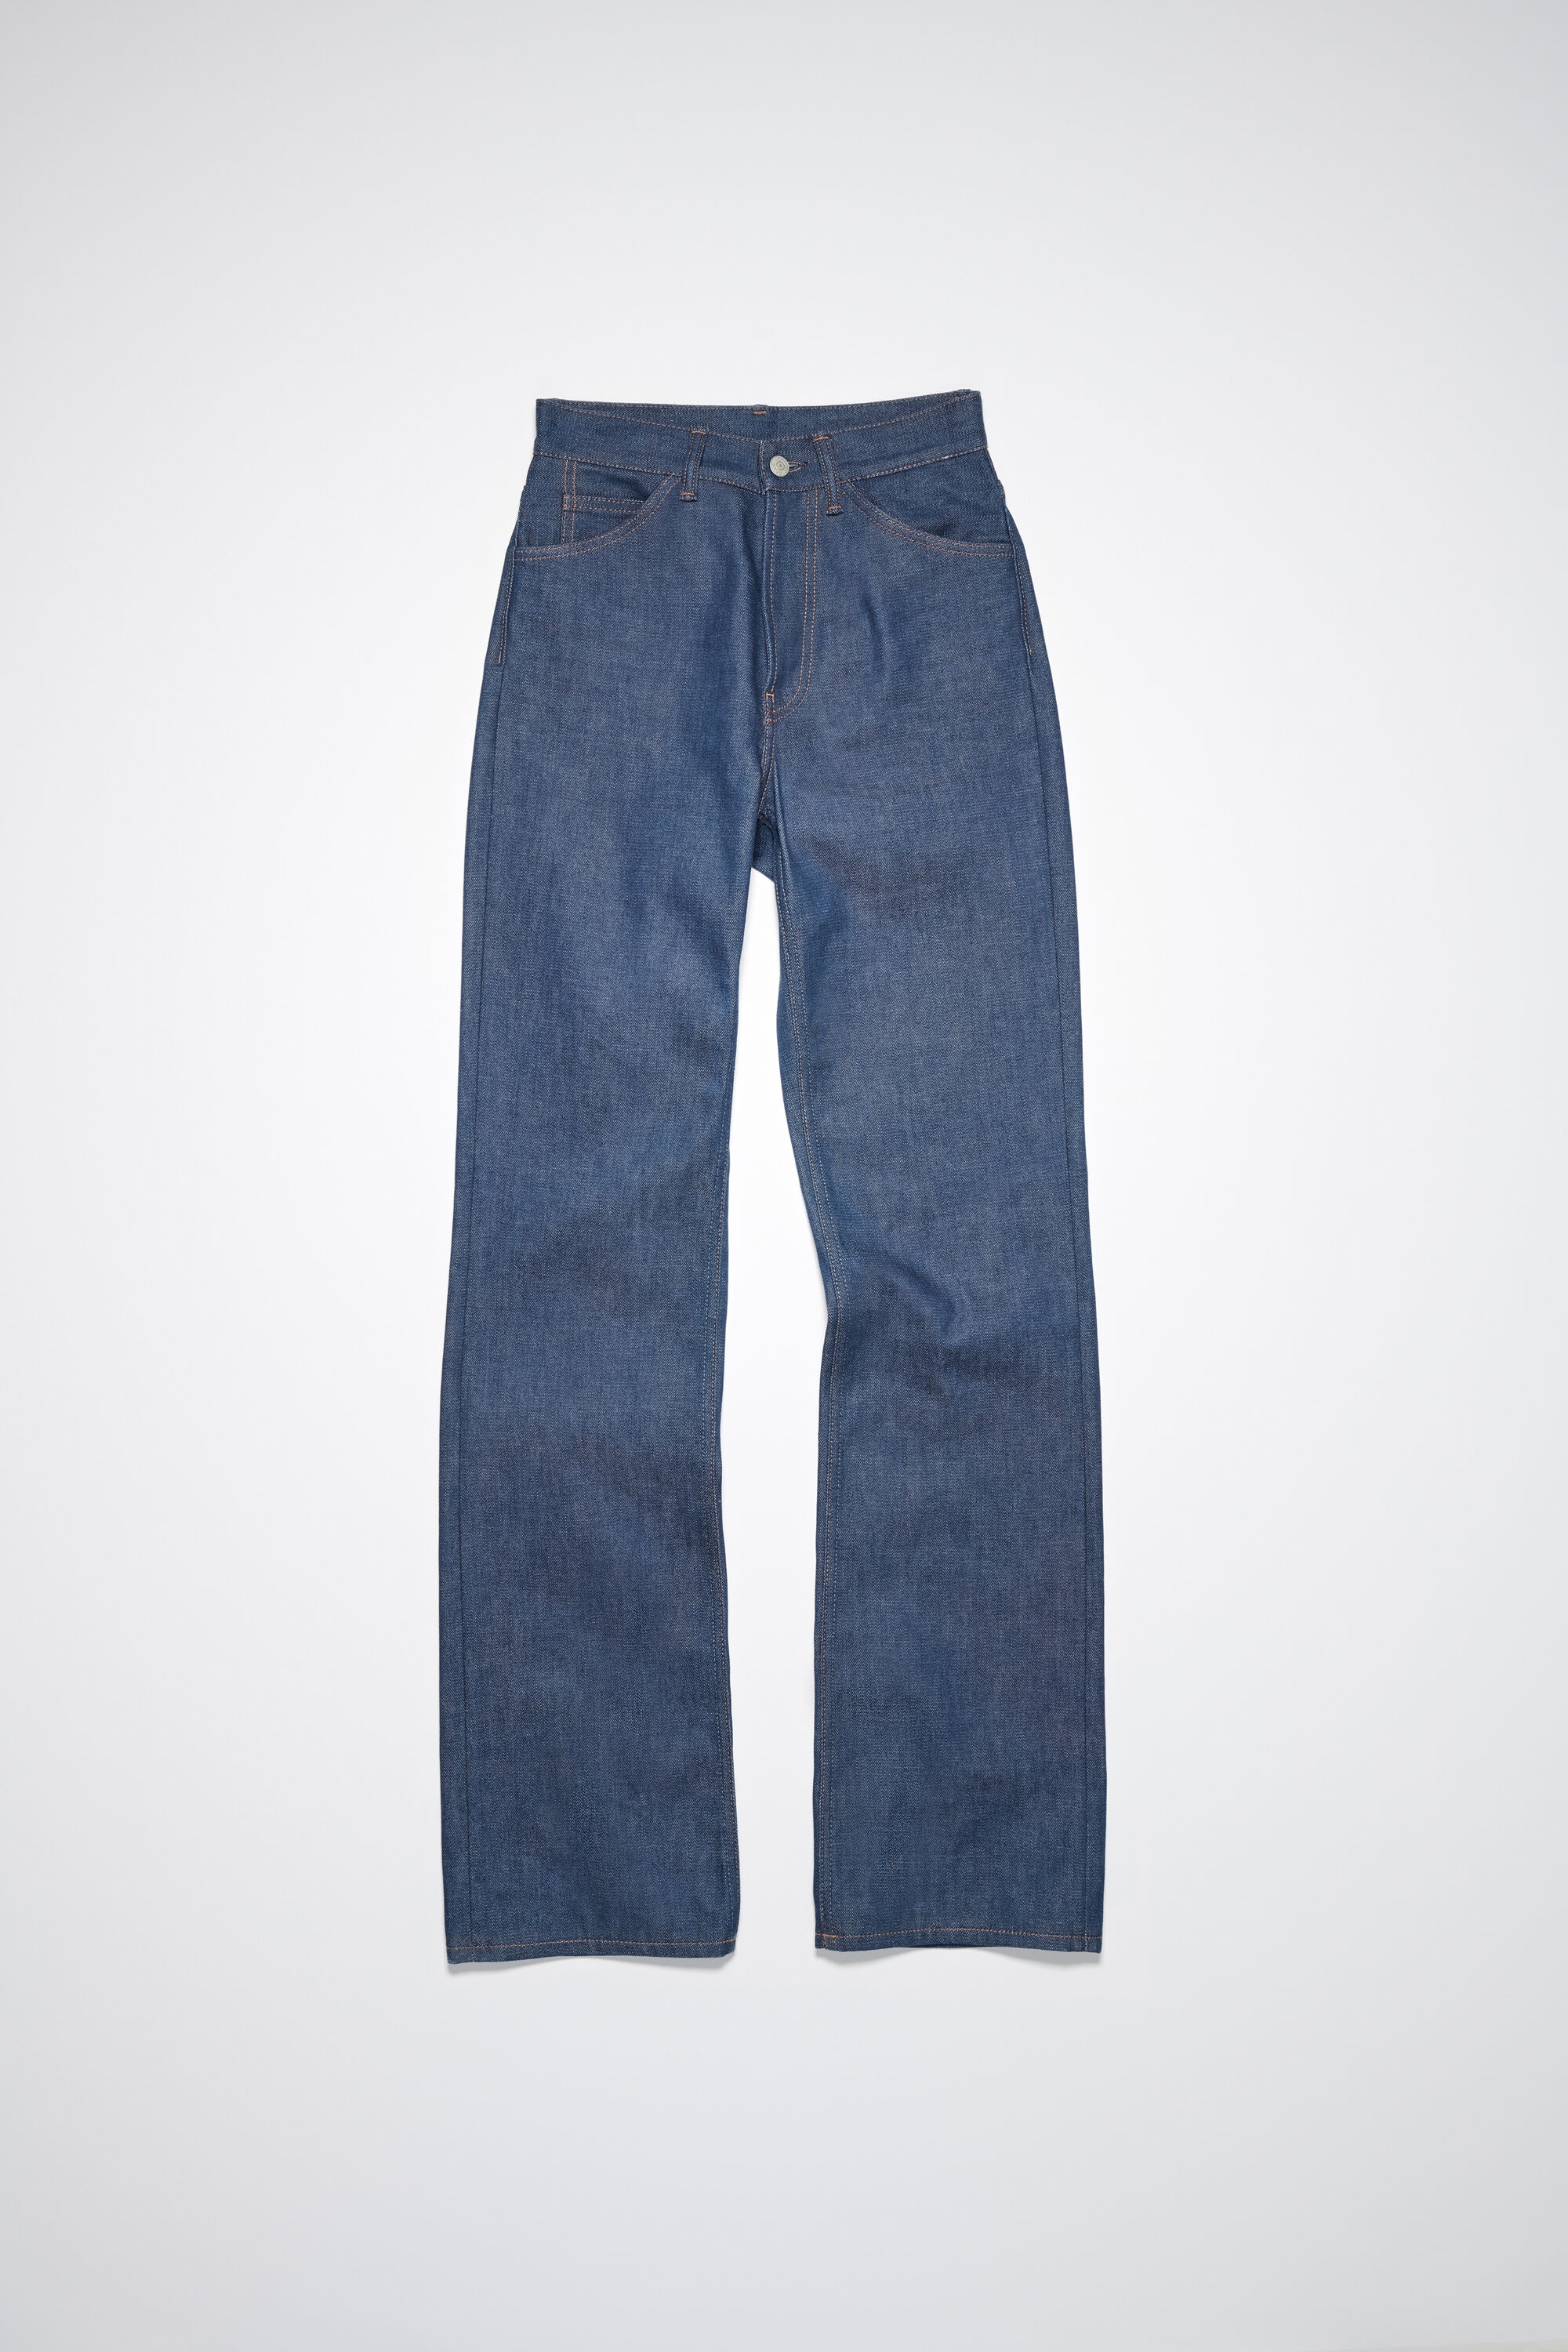 Regular fit jeans - 1977 - Indigo blue - 7